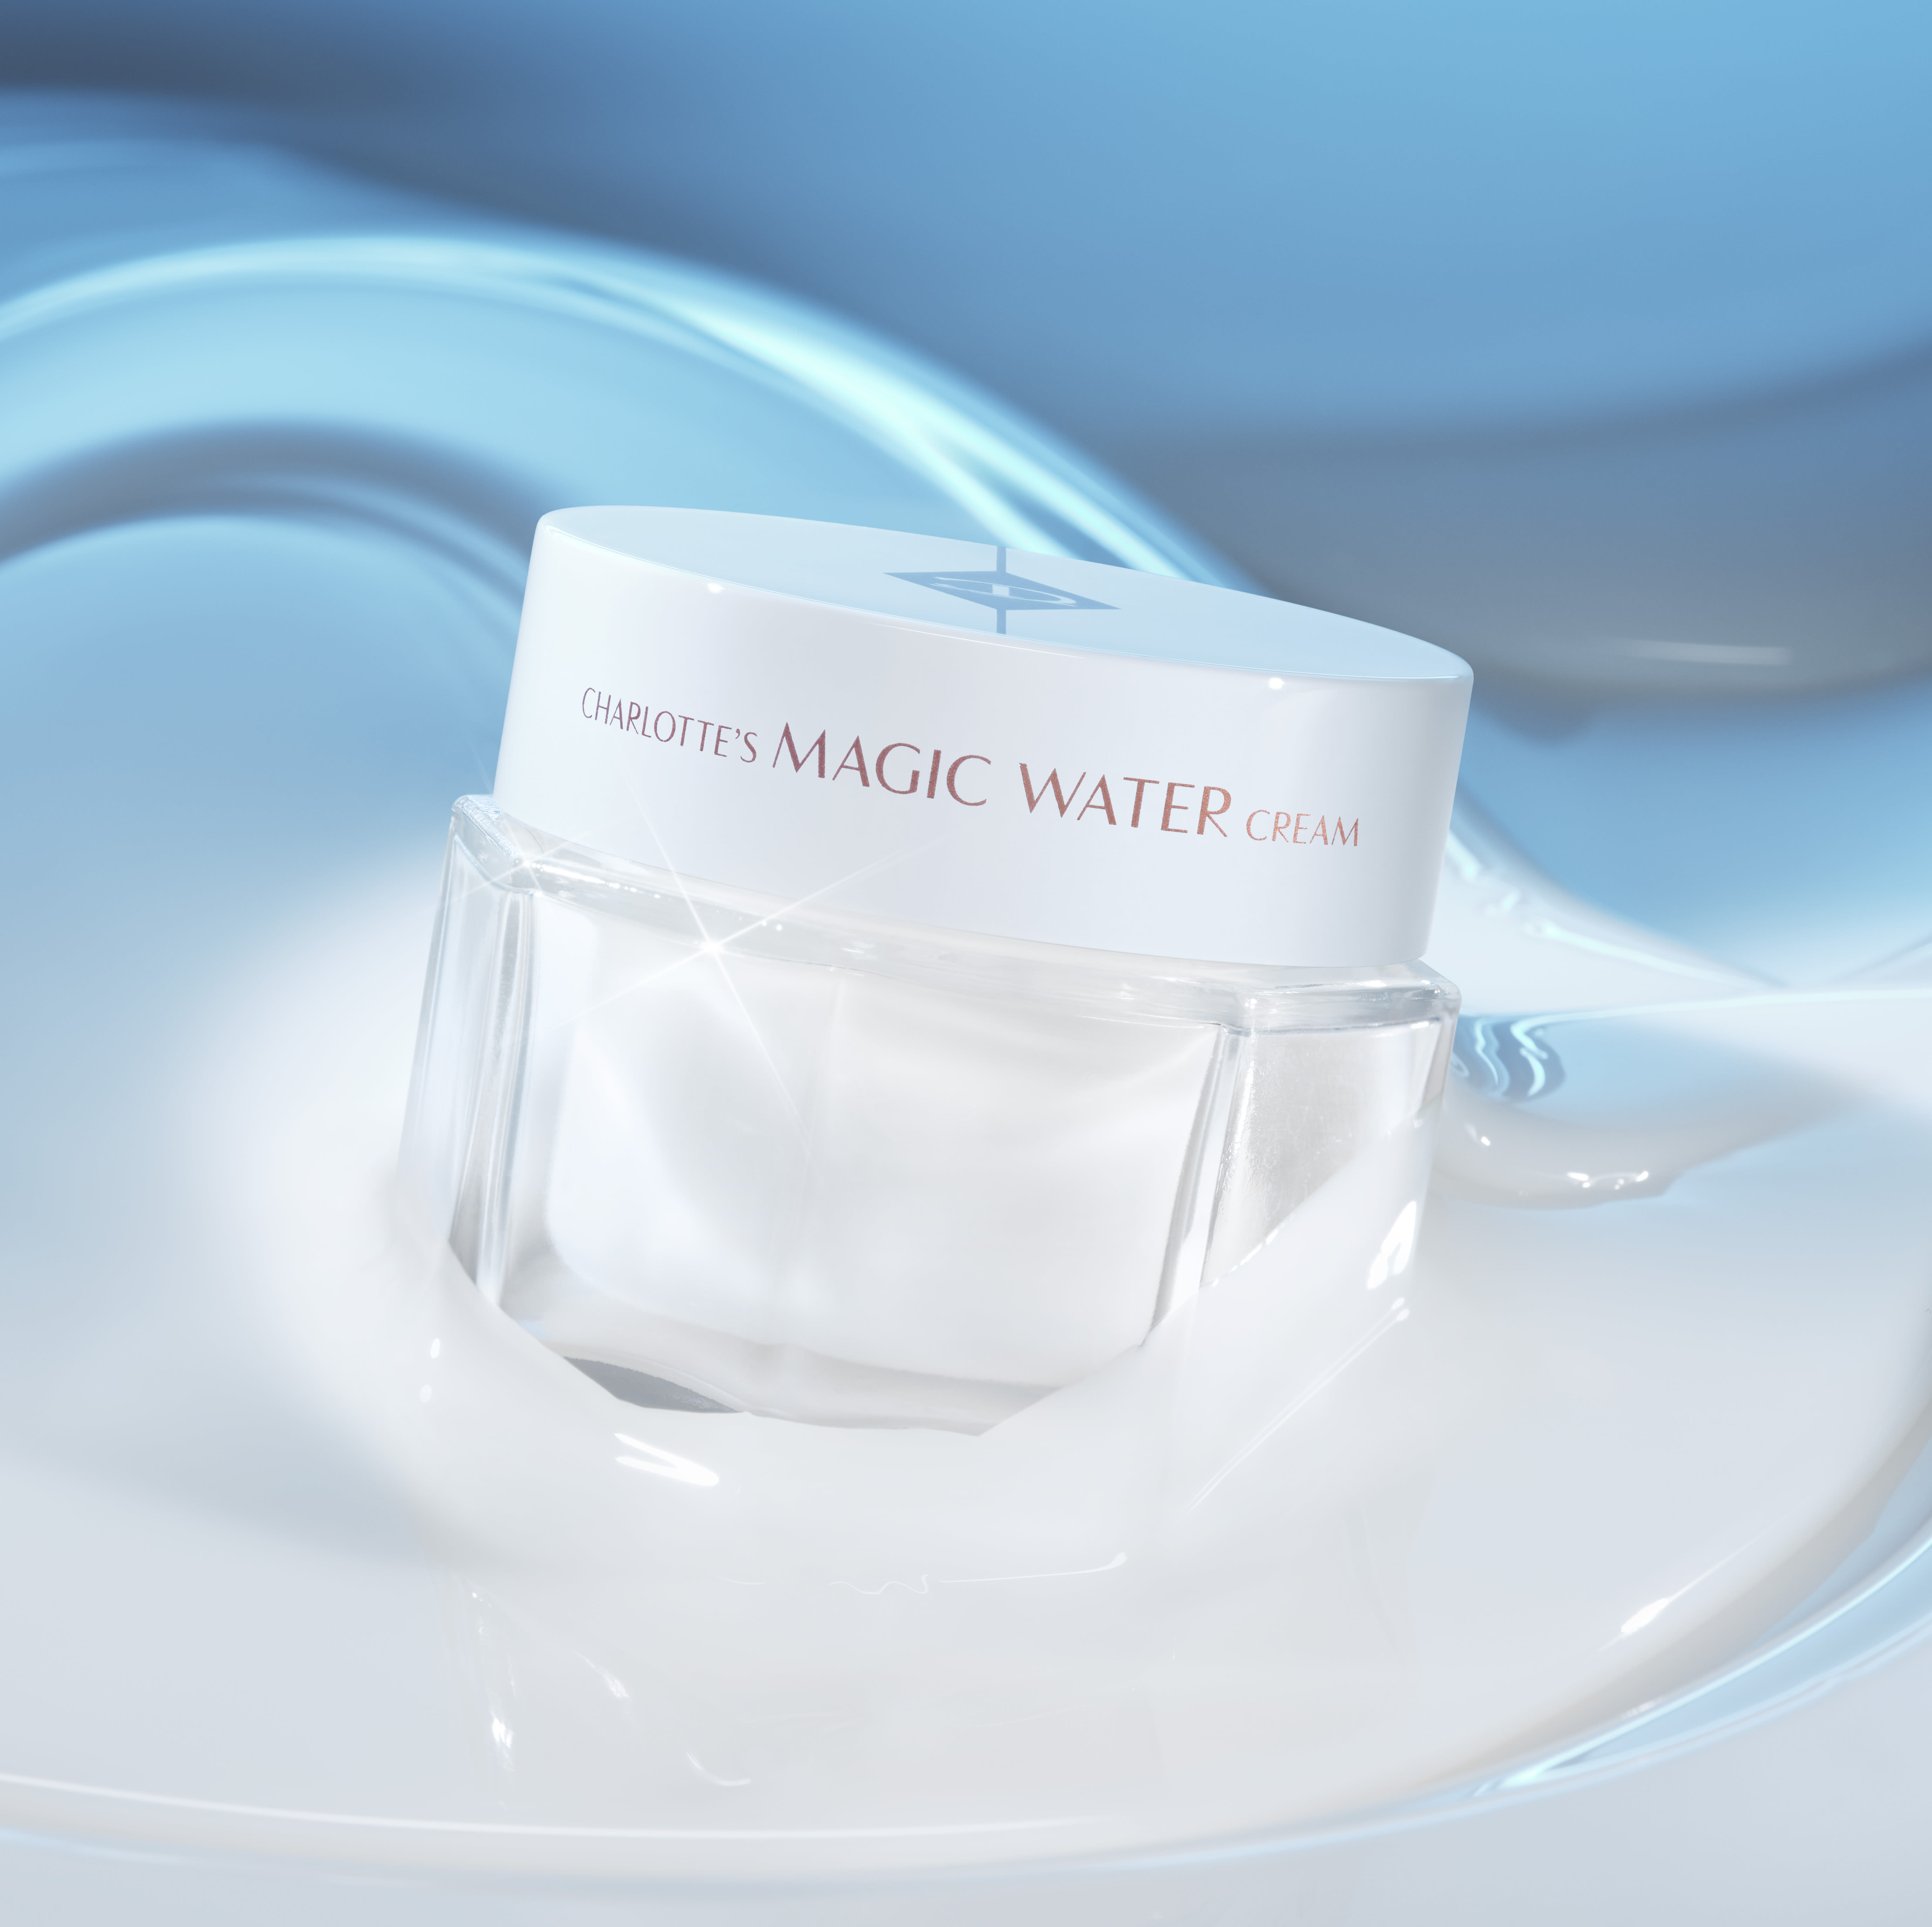 Charlotte's Magic Water Cream gel moisturiser with a silky, lightweight texture